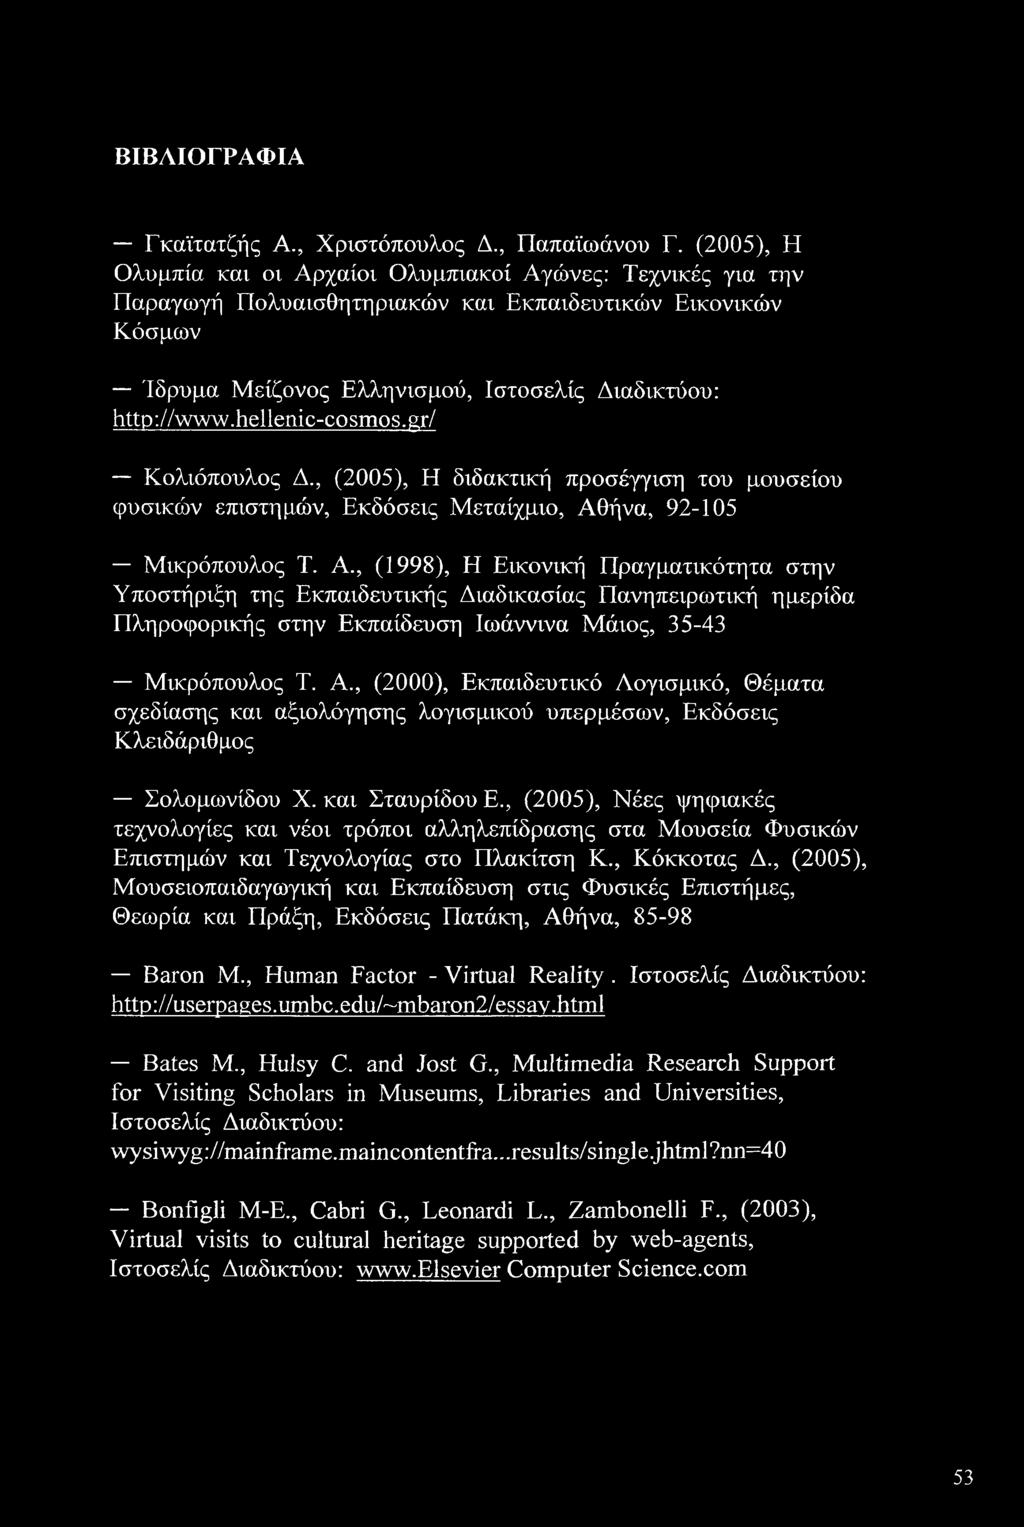 hellenic-cosmos.gr/ Κολιόπουλος Δ., (2005), Η διδακτική προσέγγιση του μουσείου φυσικών επιστημών, Εκδόσεις Μεταίχμιο, Αθ